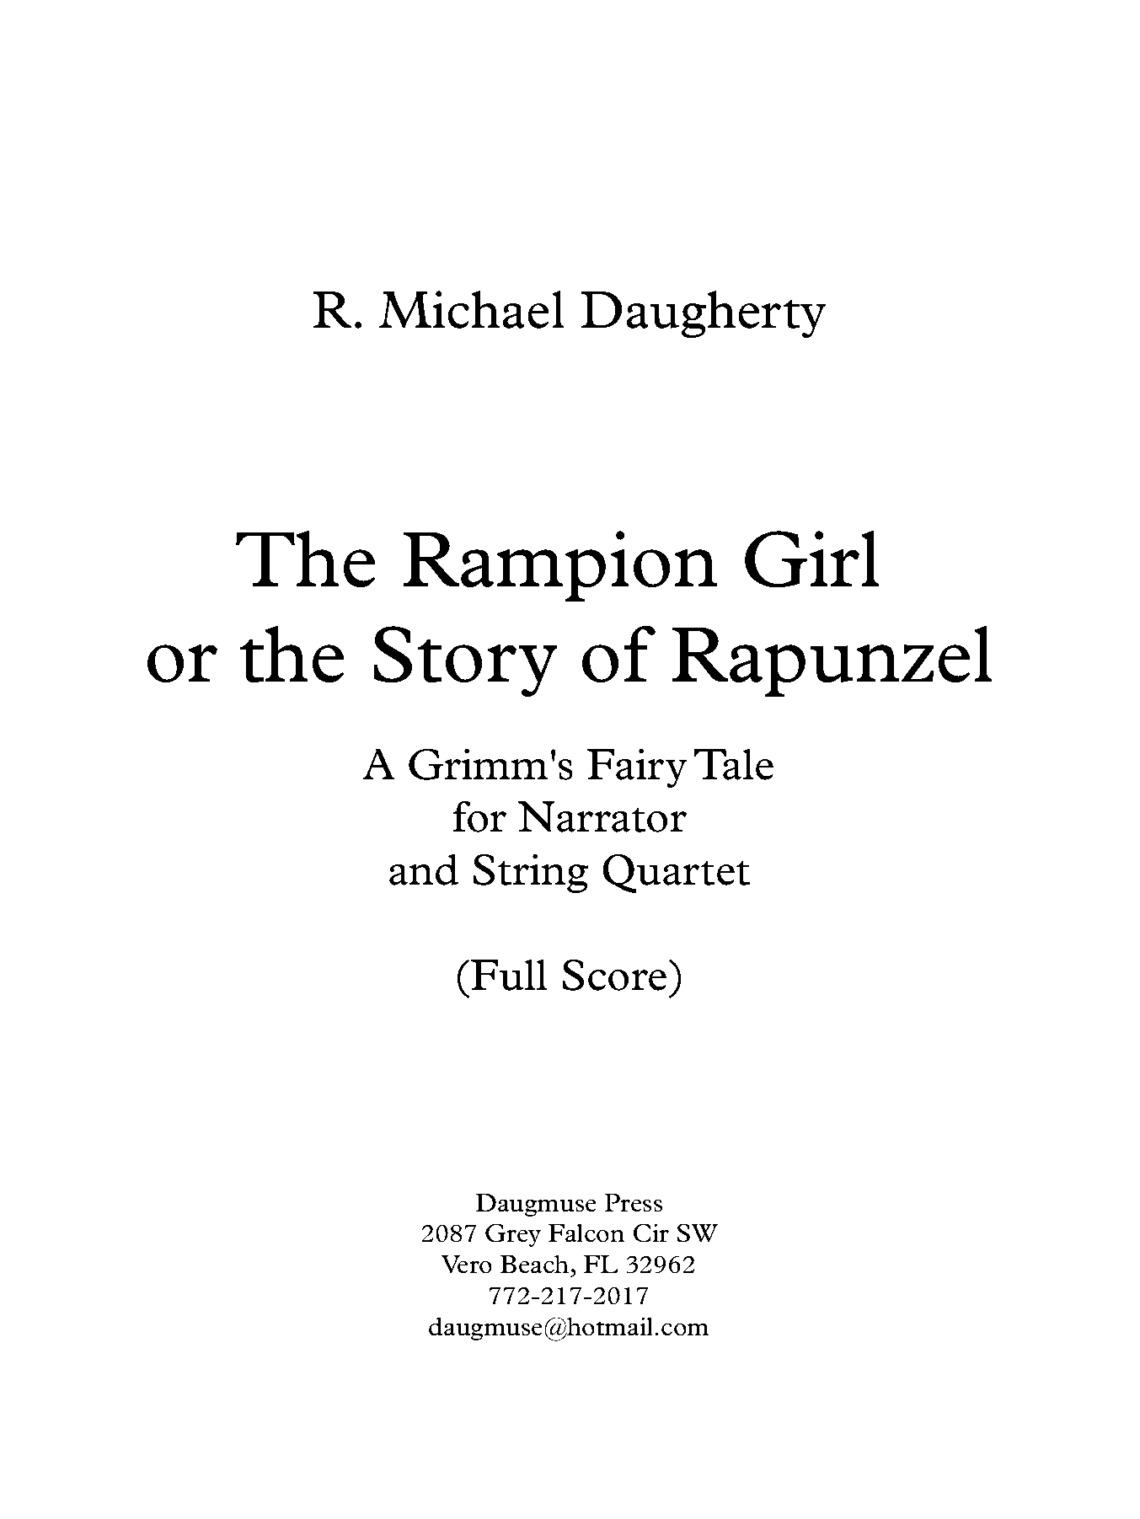 The Rampion Girl or the Story of Rapunzel - Full Score